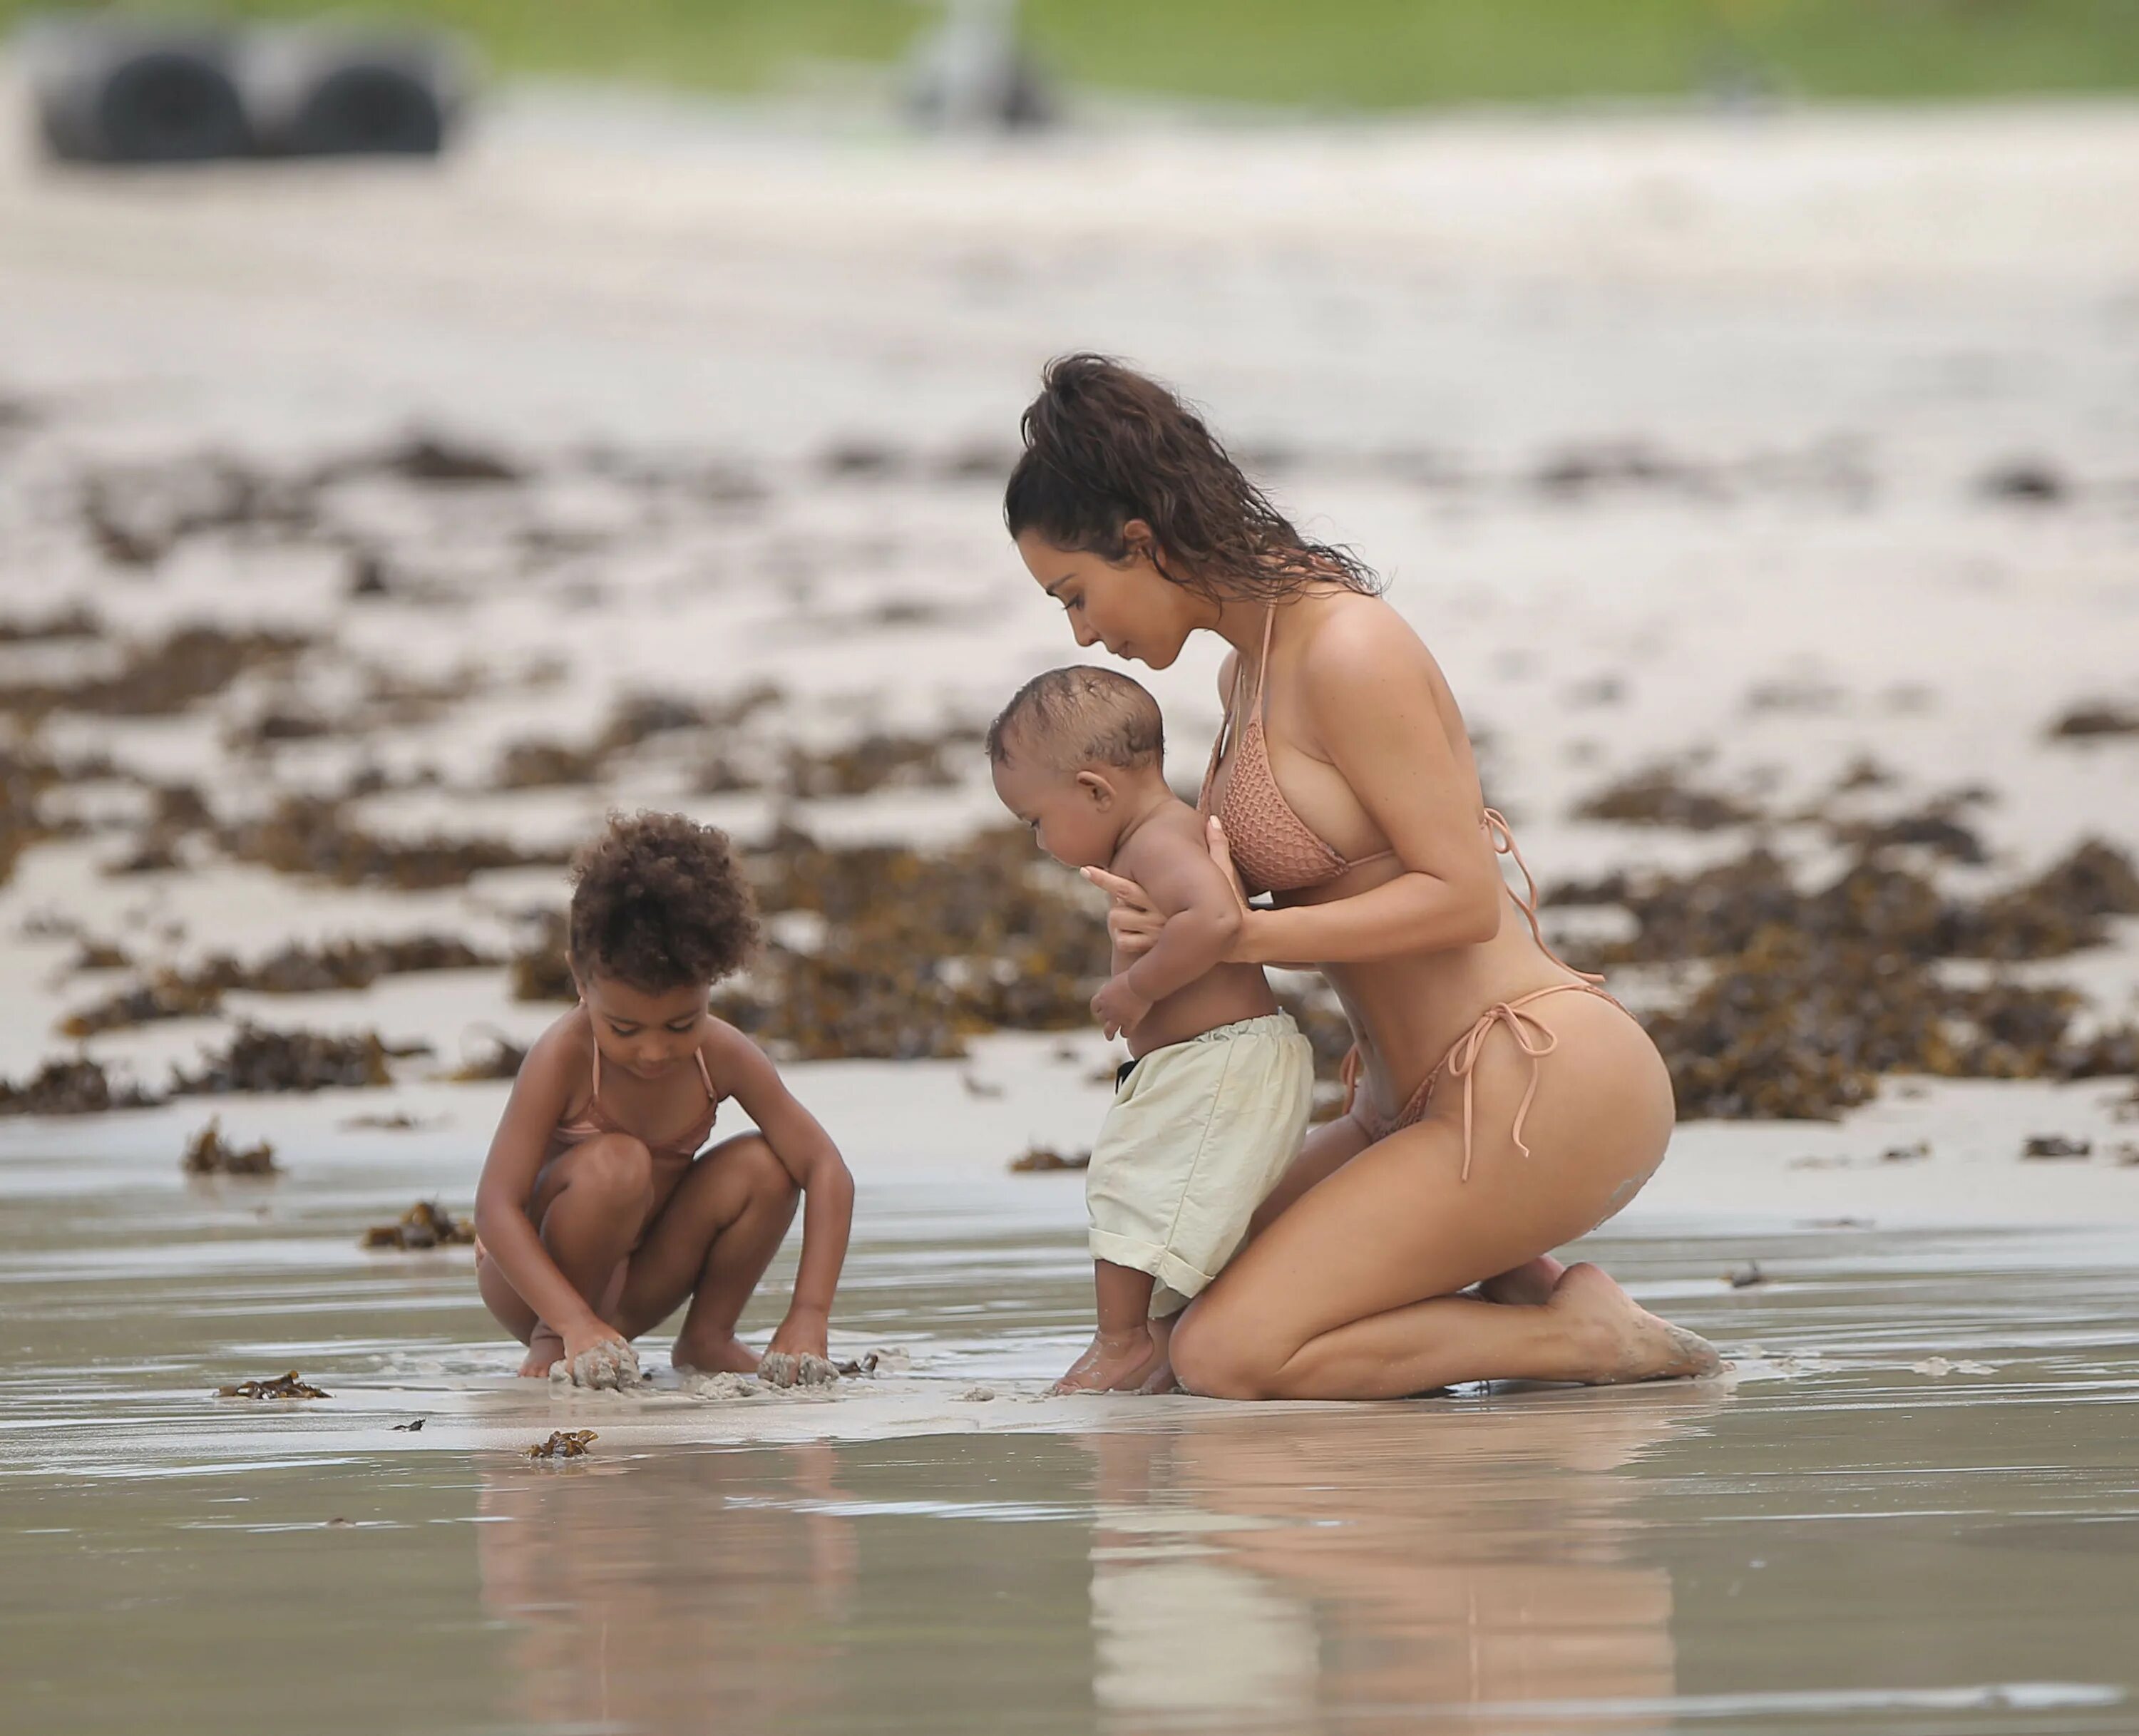 Naturalist add on. Мамочки на пляже с семьей. Обнажение в семье.